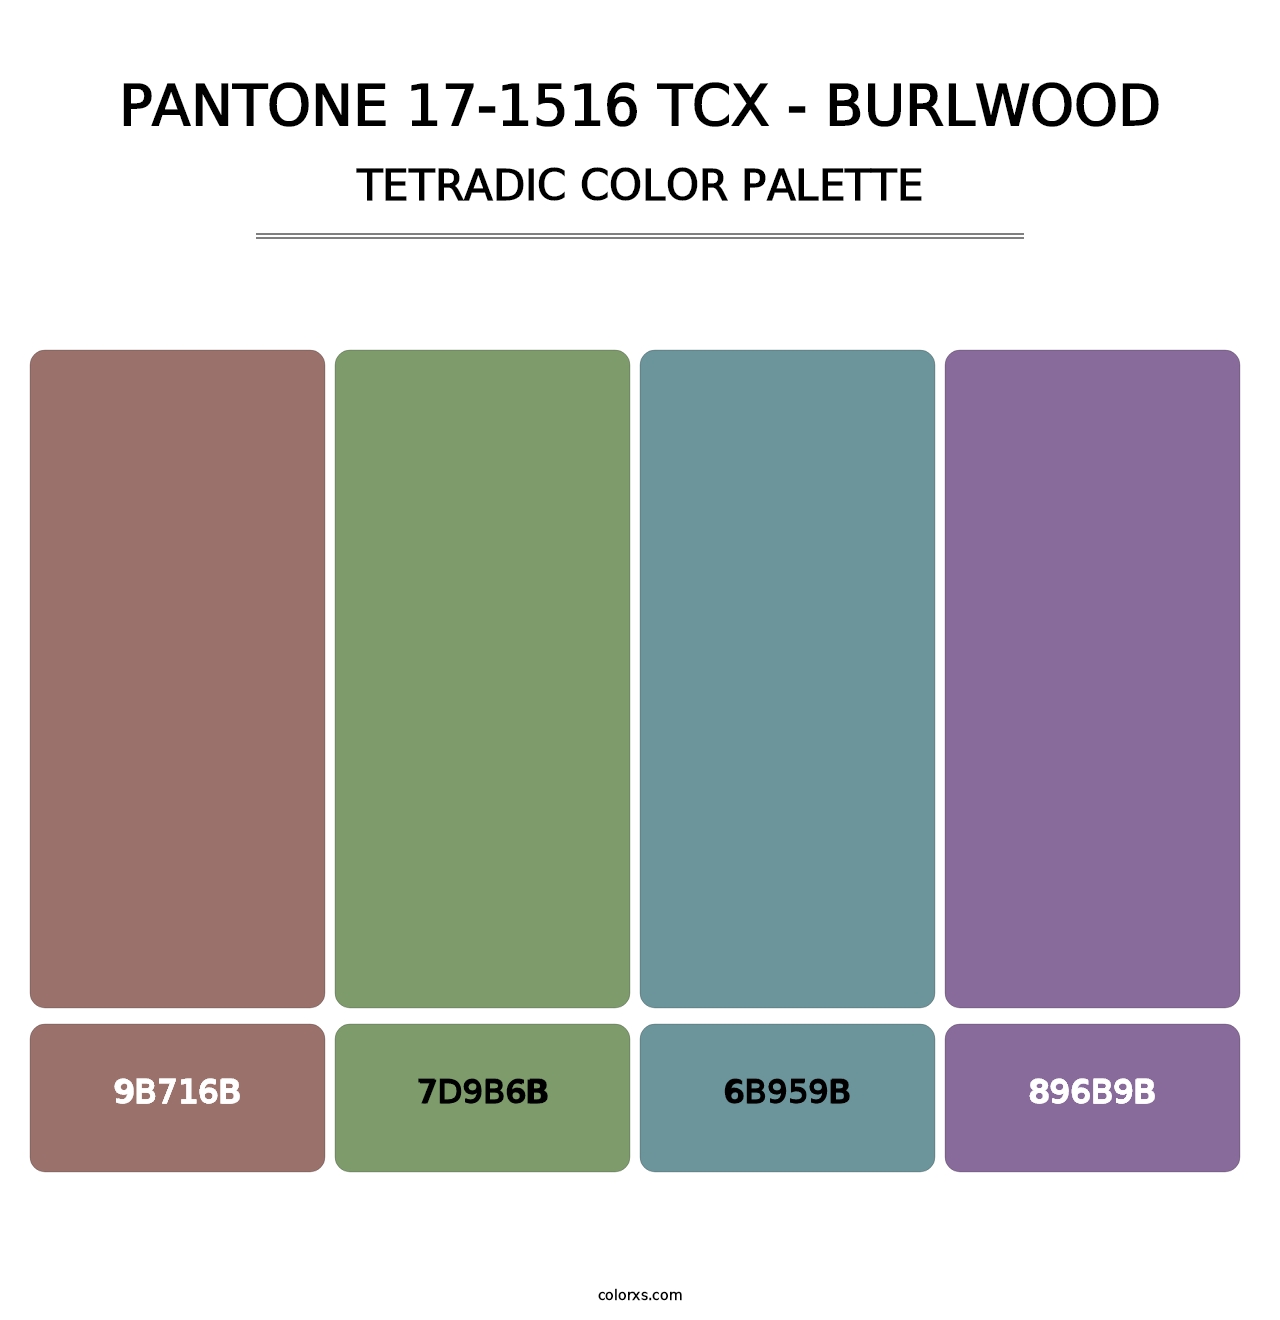 PANTONE 17-1516 TCX - Burlwood - Tetradic Color Palette